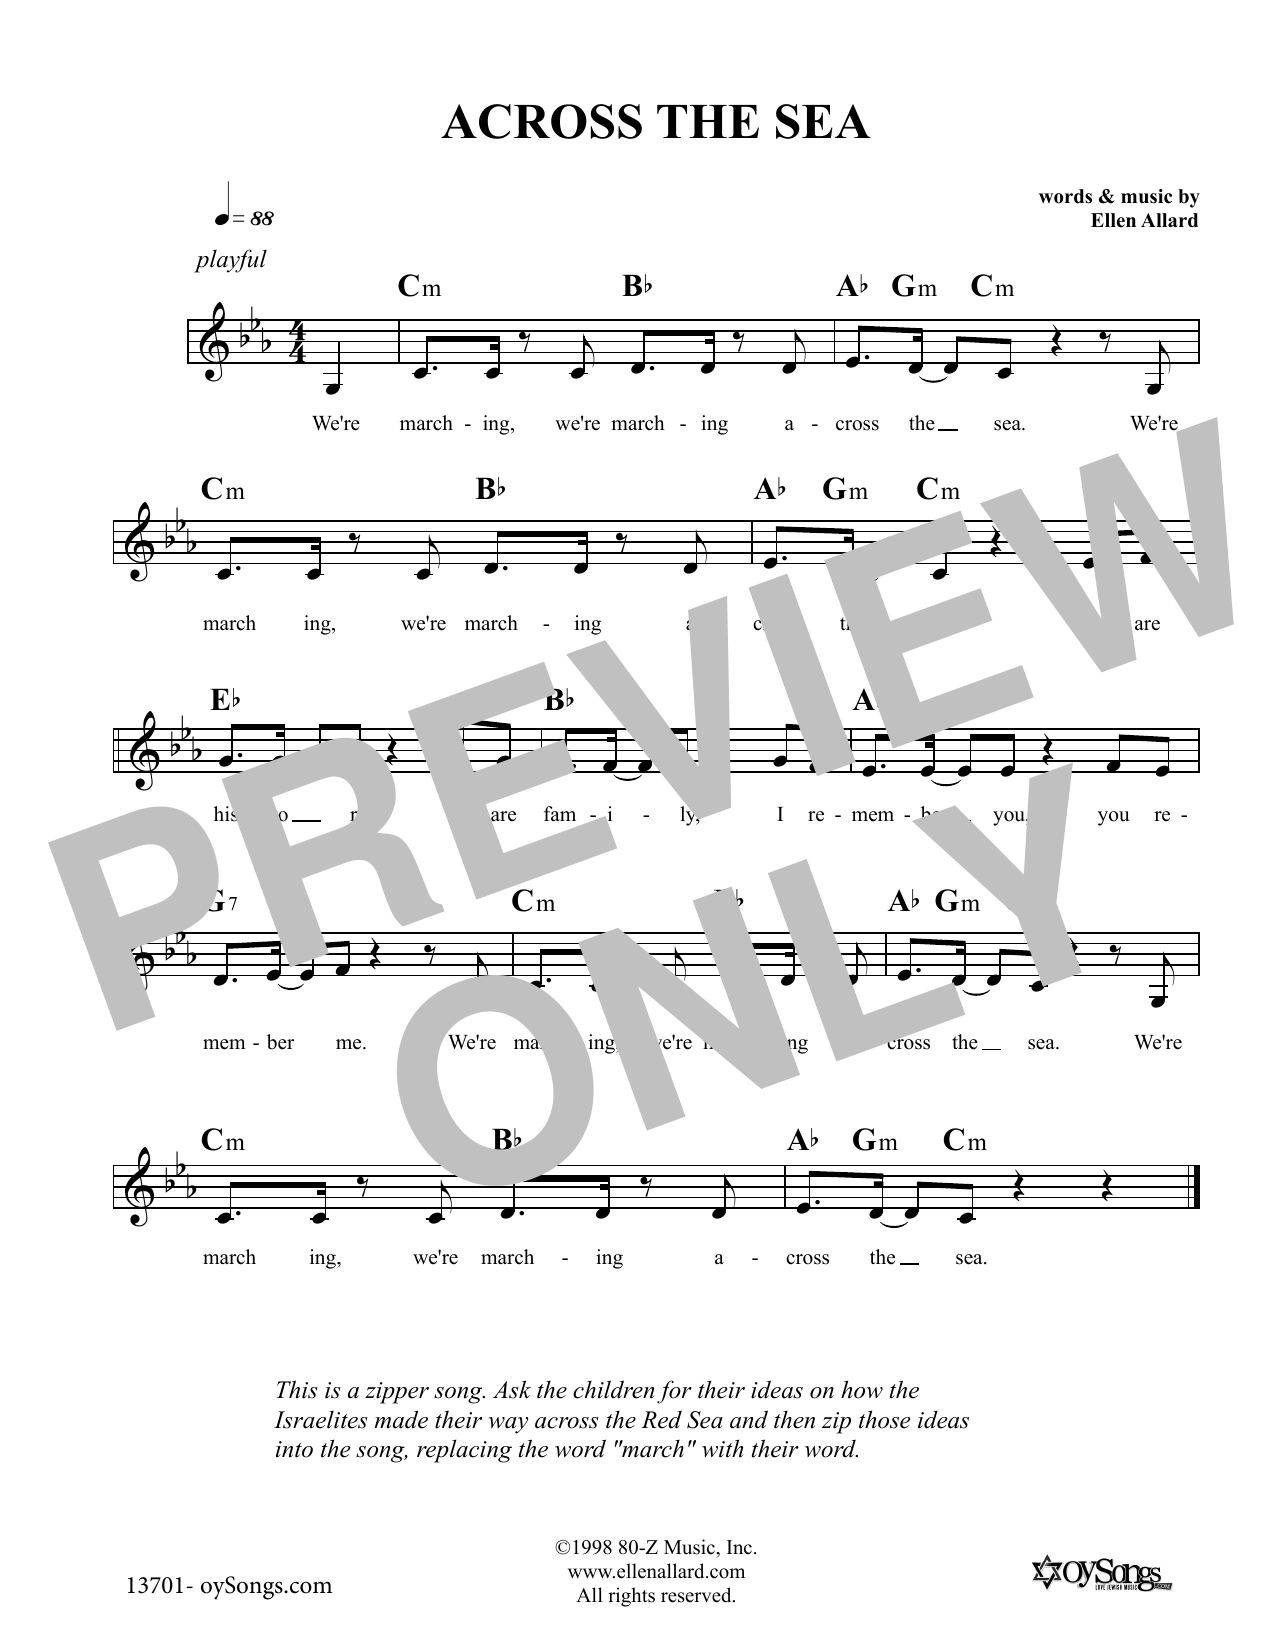 Ellen Allard Across the Sea Sheet Music Notes & Chords for Melody Line, Lyrics & Chords - Download or Print PDF